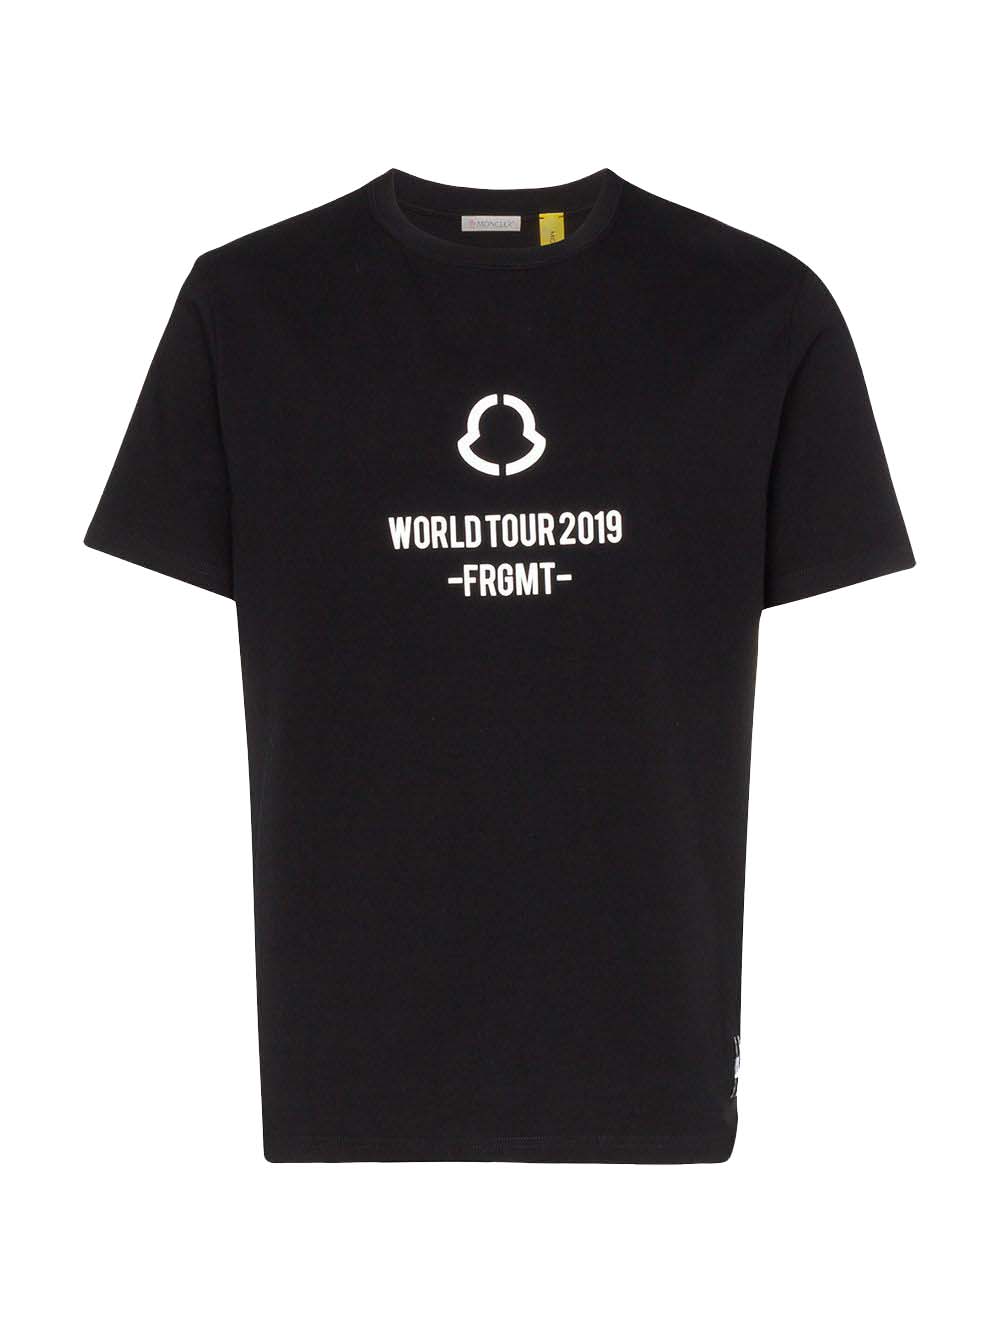 Moncler Genius x Fragment World Tour T-shirt Black White Men's - US